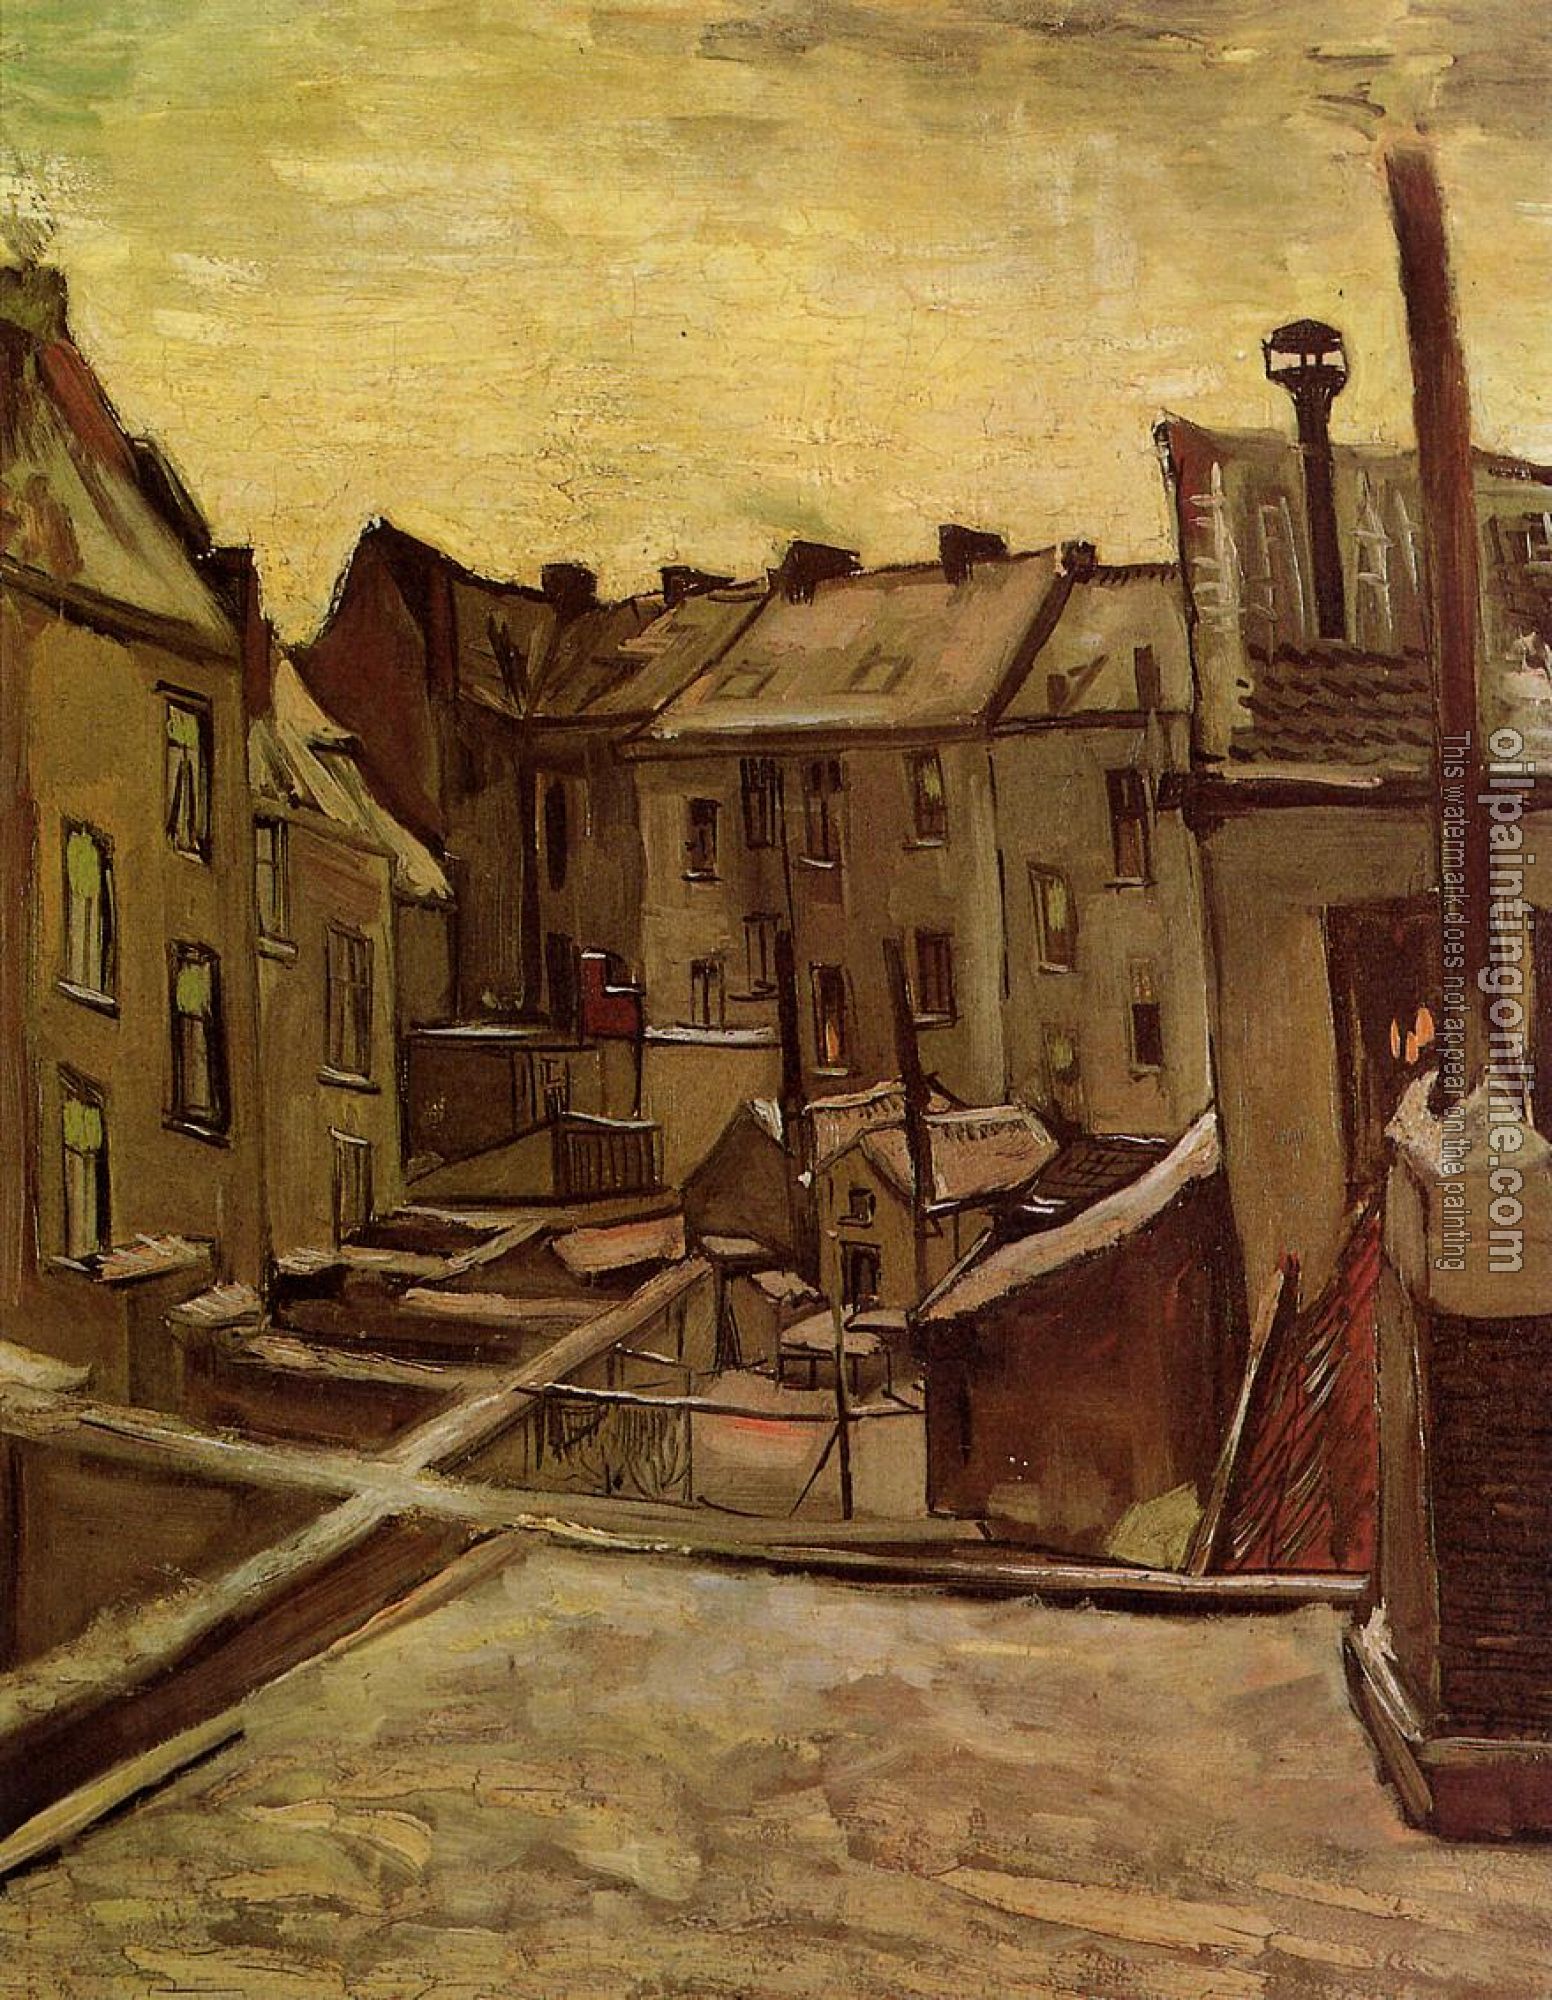 Gogh, Vincent van - Backyards of Old Houses in Antwerp in the Snow